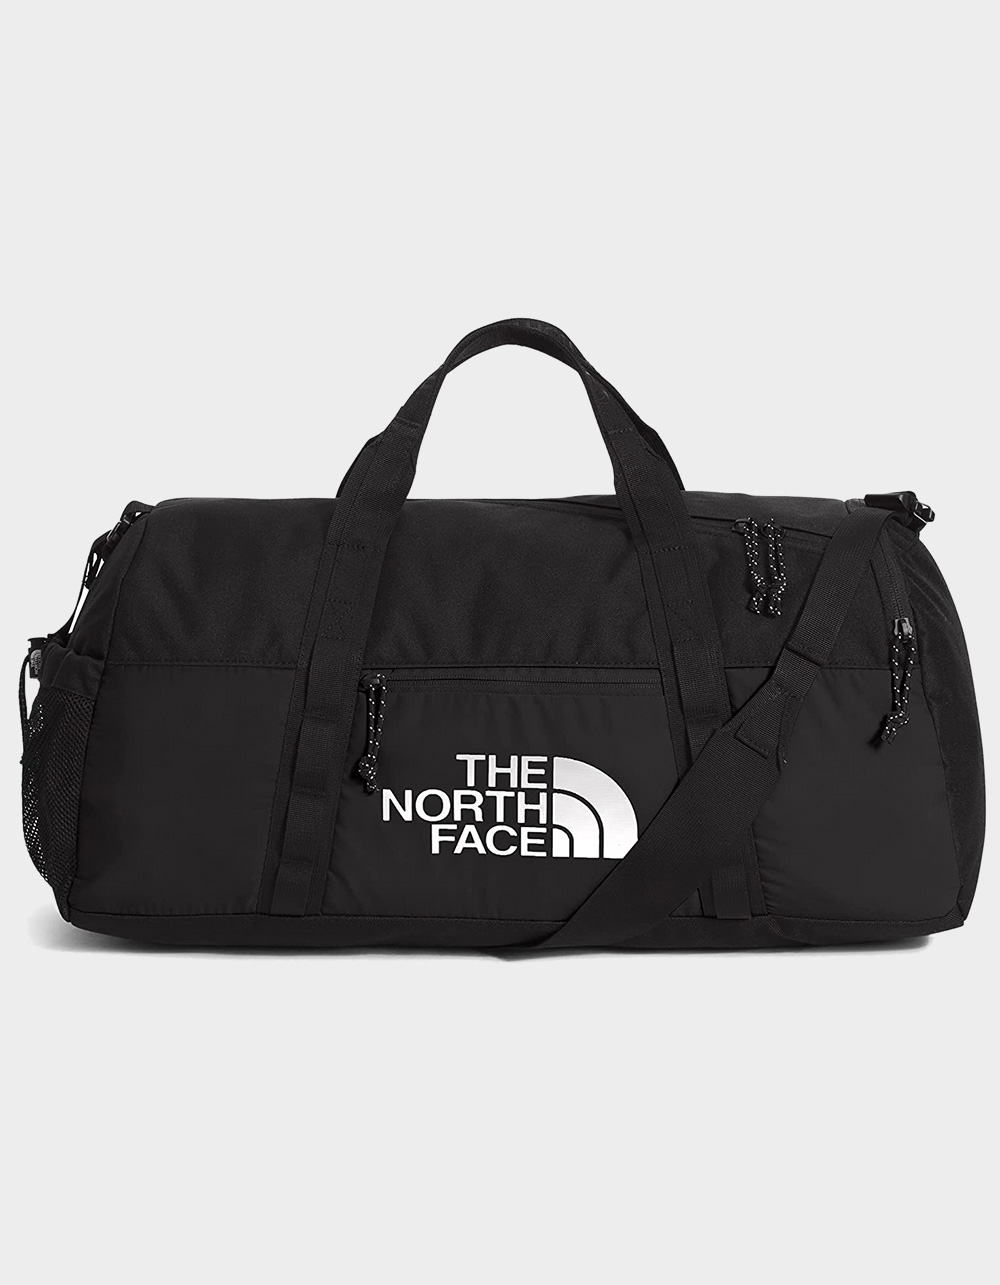 THE NORTH FACE Bozer Duffle Bag